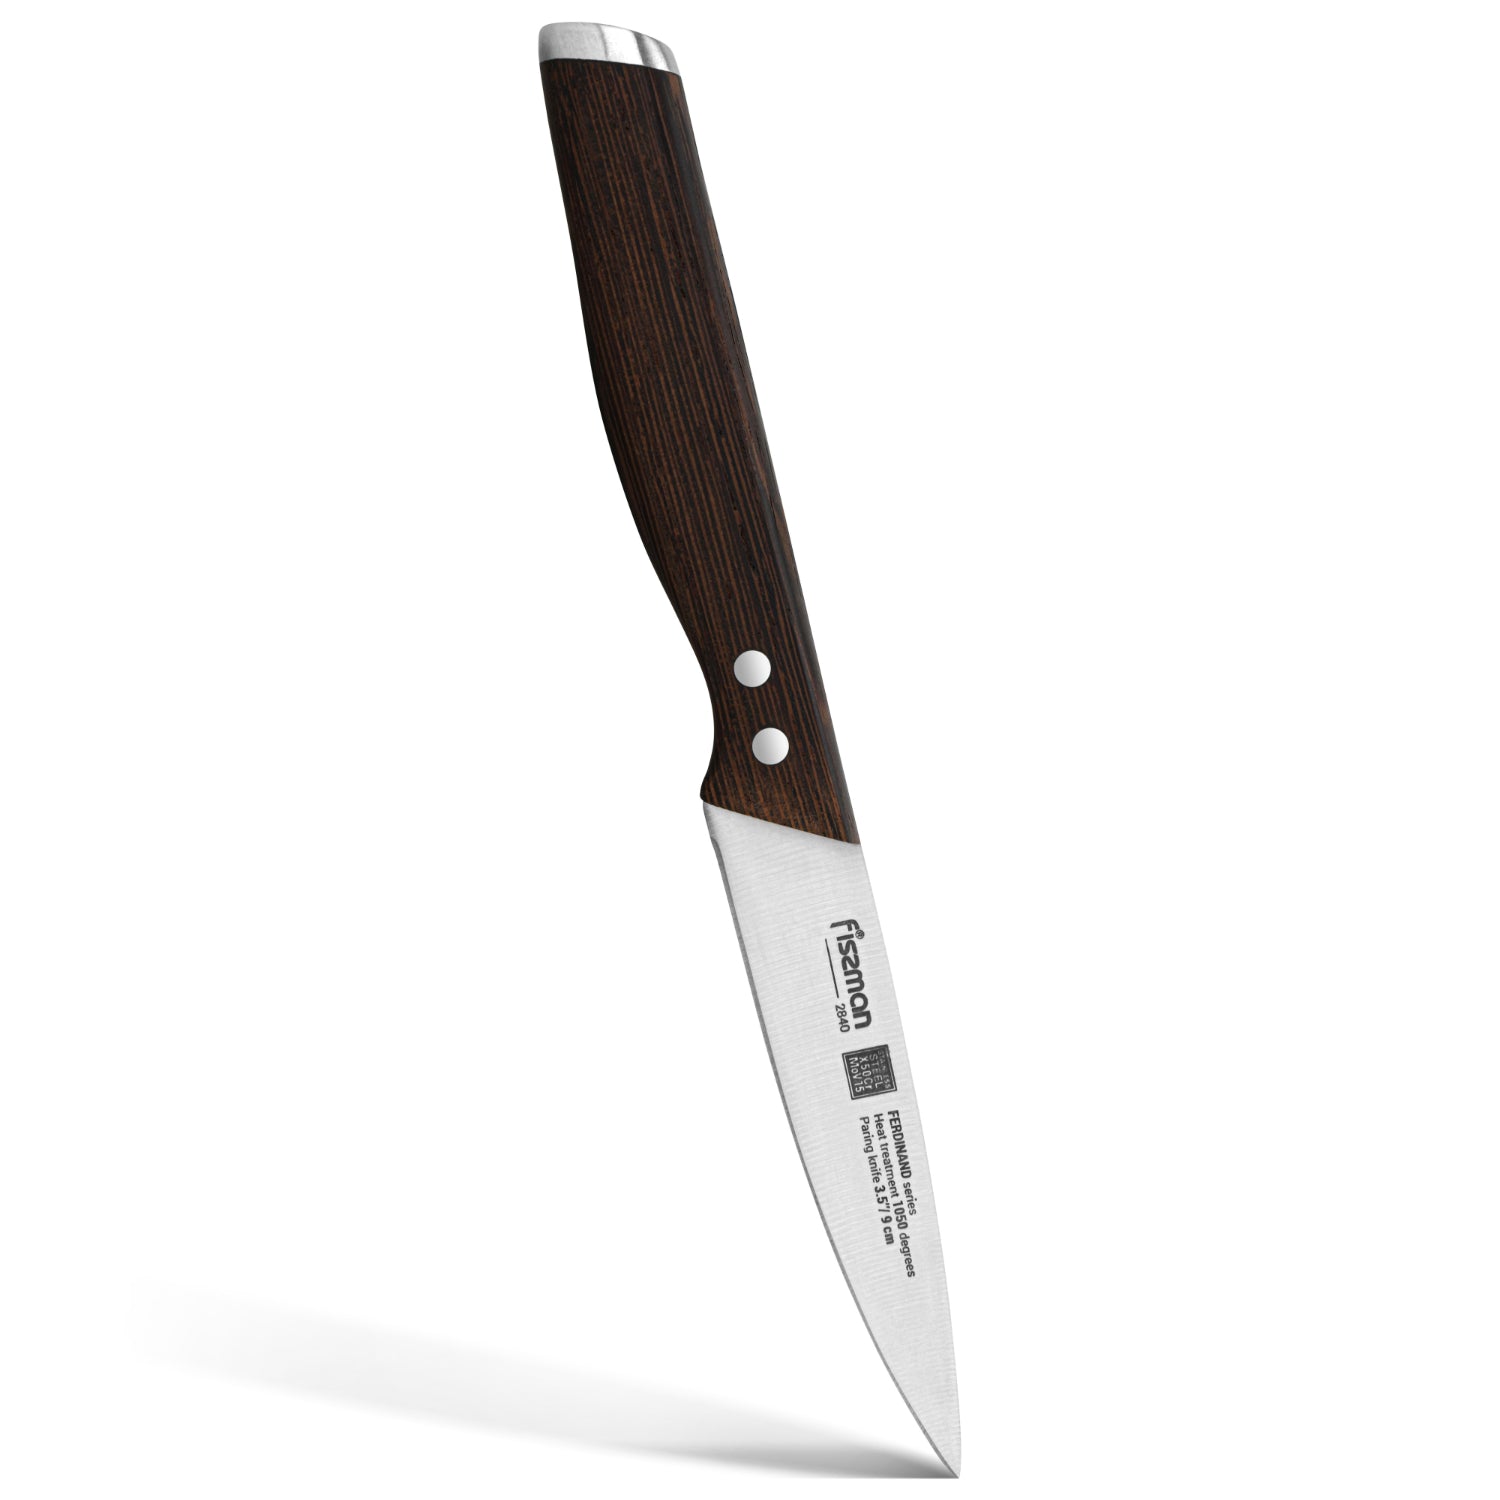 Fissman 3.5'' Paring Knife Ferdinand - X50CrMoV15 steel